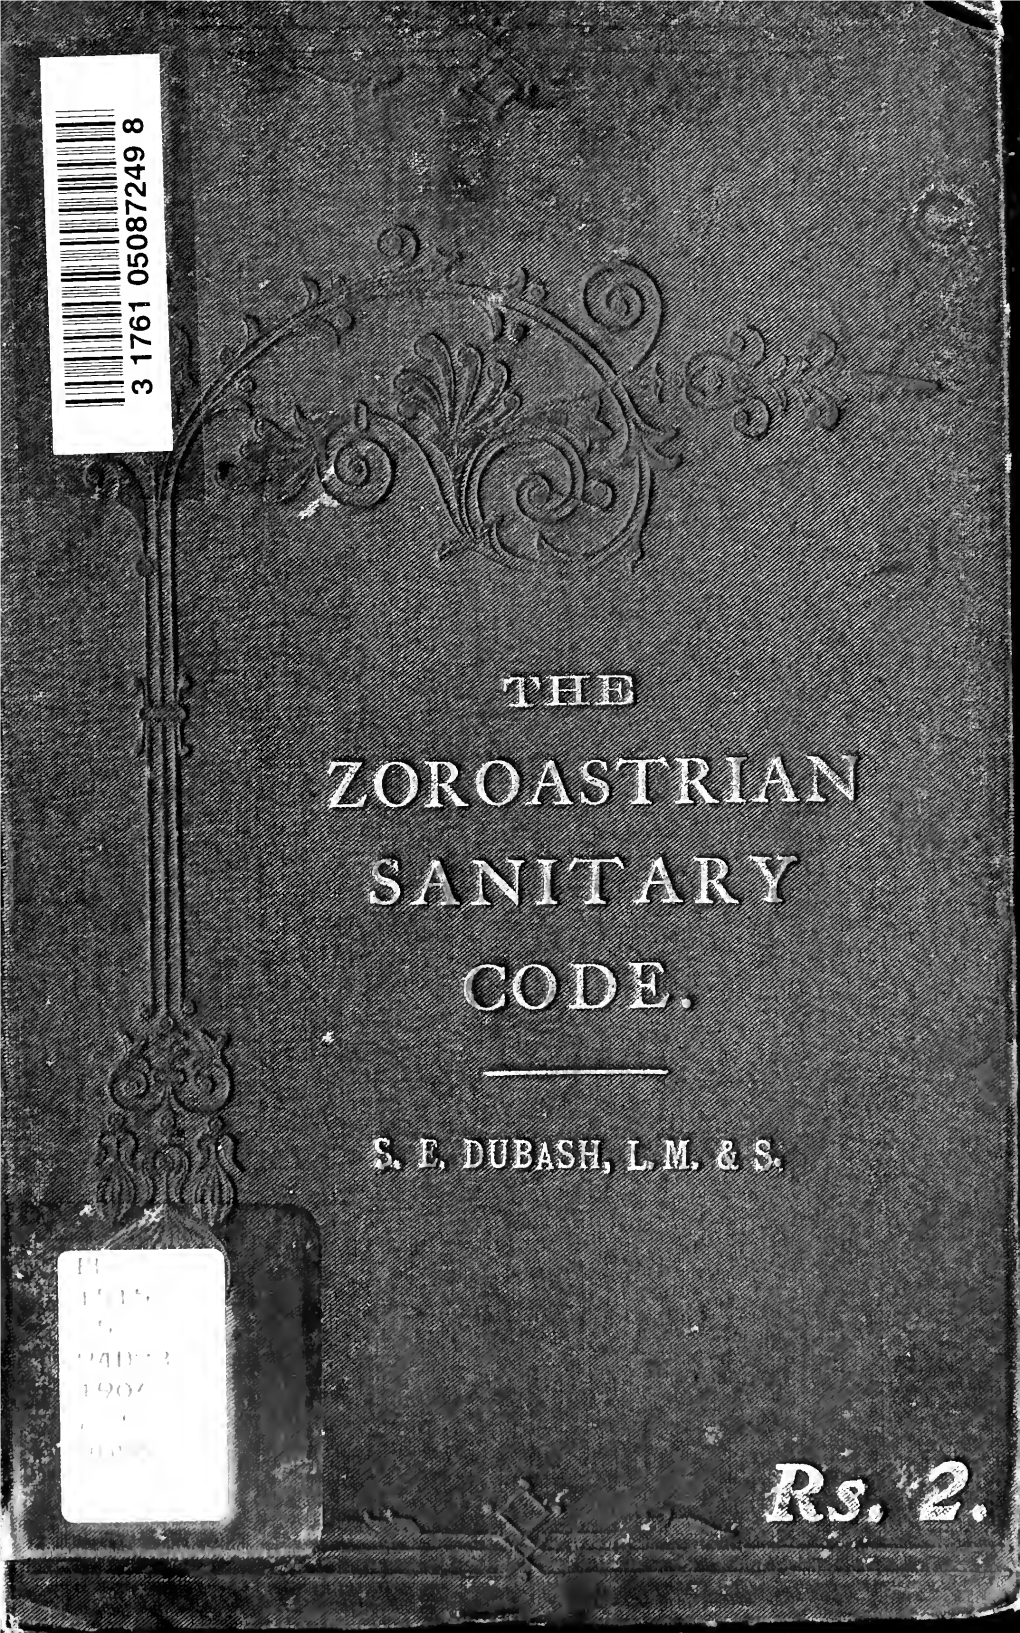 The Zoroastrian Sanitary Code